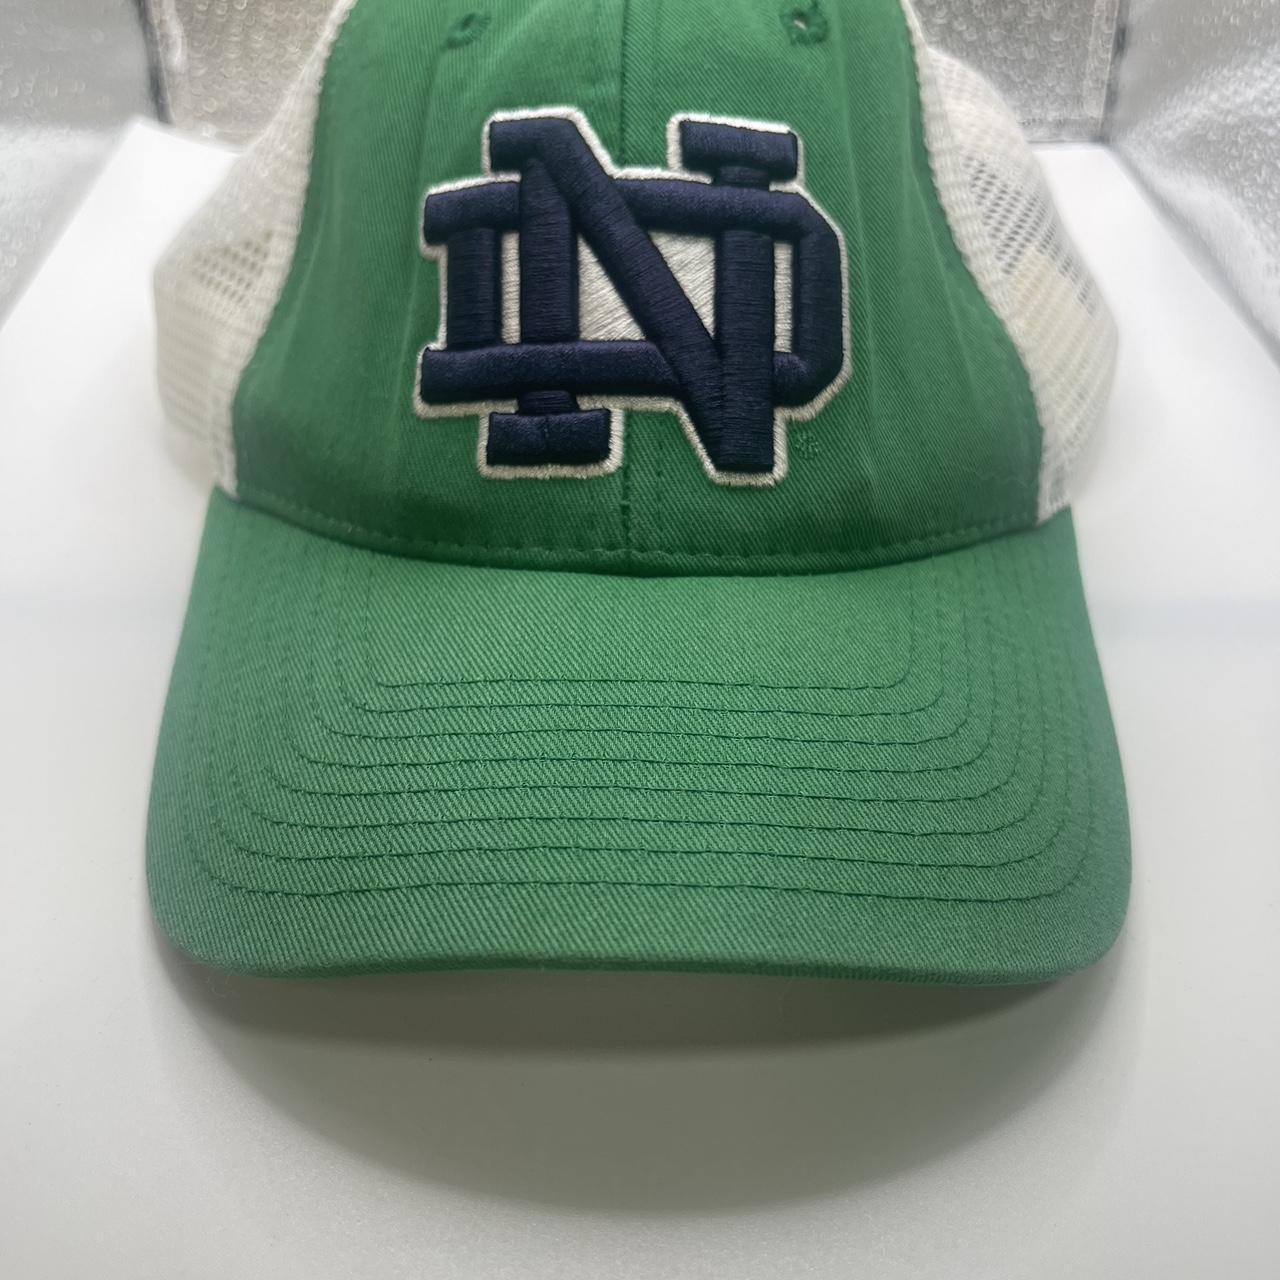 Zephyr Notre Dame hat mesh SnapBack green and white.... - Depop